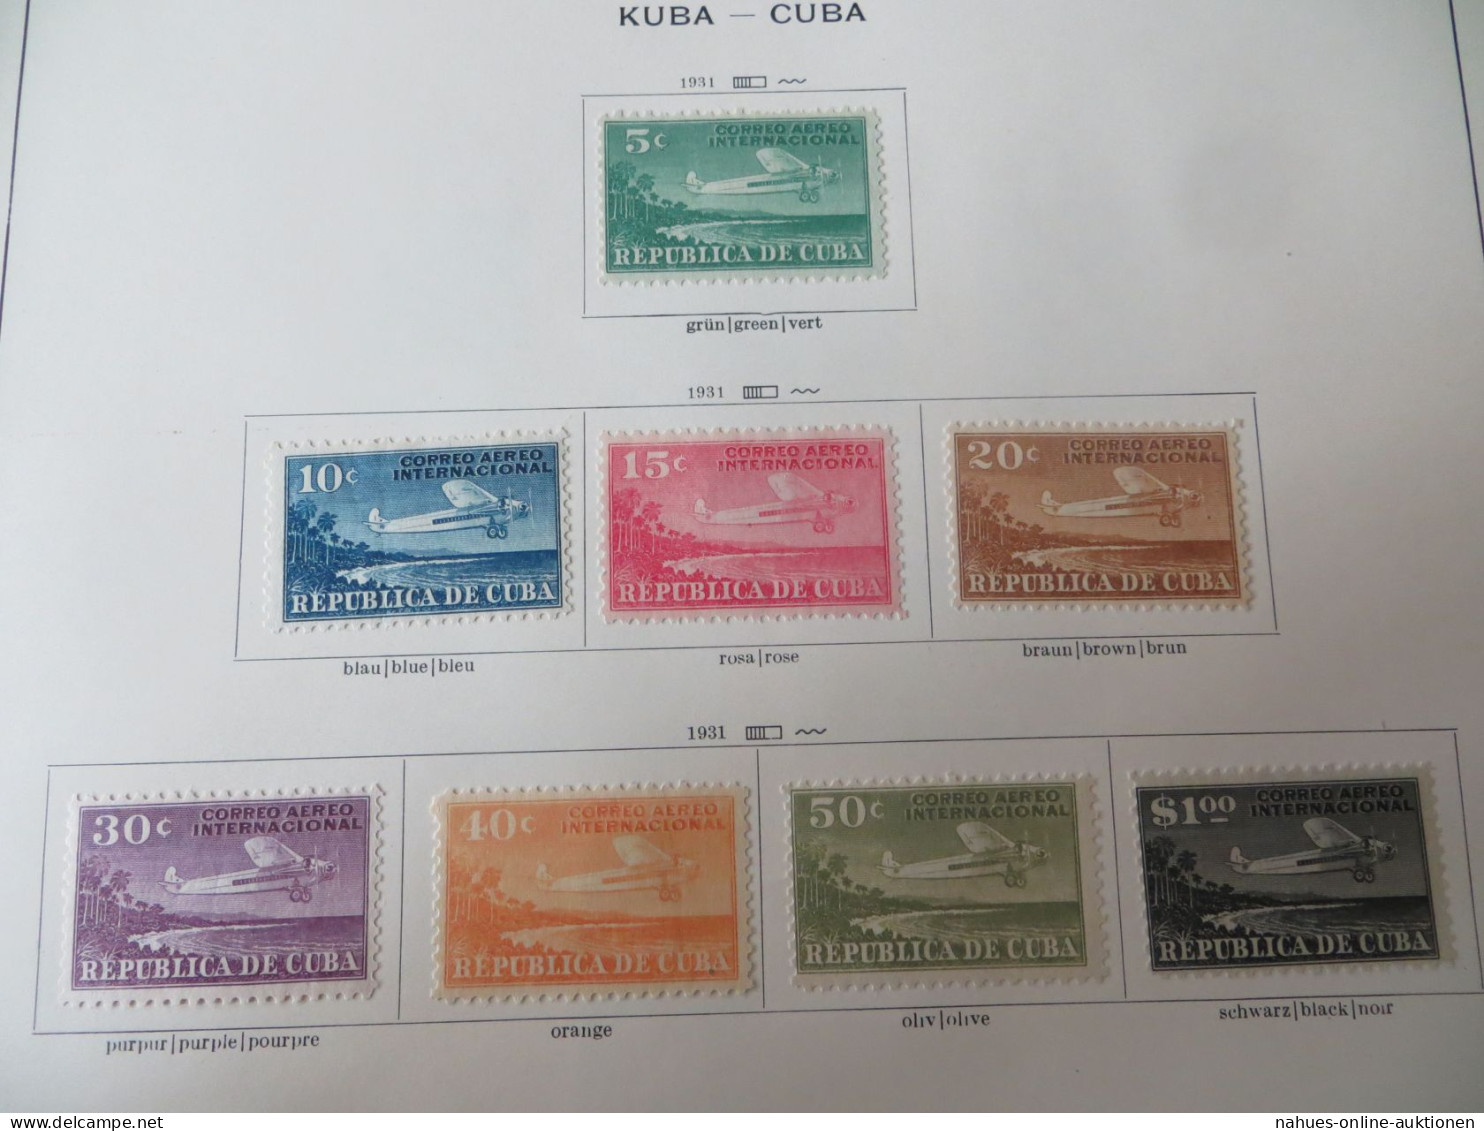 Kuba Cuba Karibik Übersee Nachlass gute Klassik Sammlung ab 1873